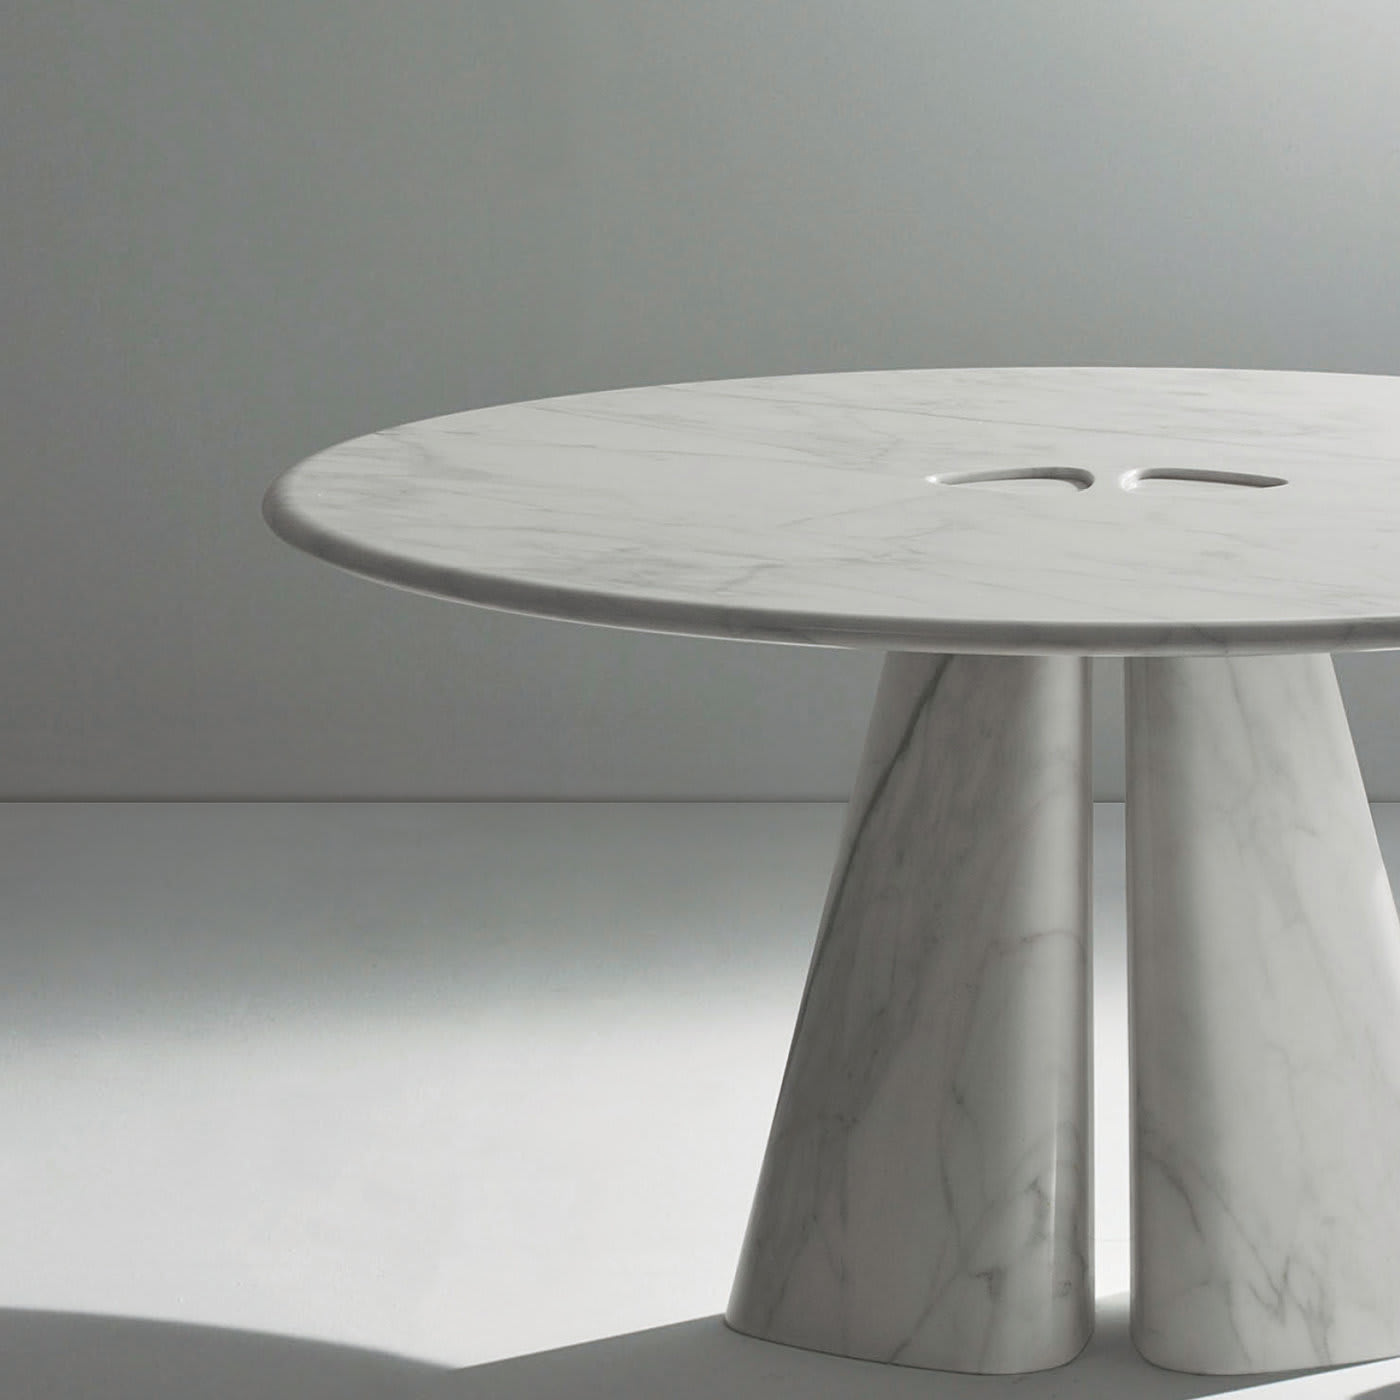 Raja Round Table by Bartoli Design - Laura Meroni